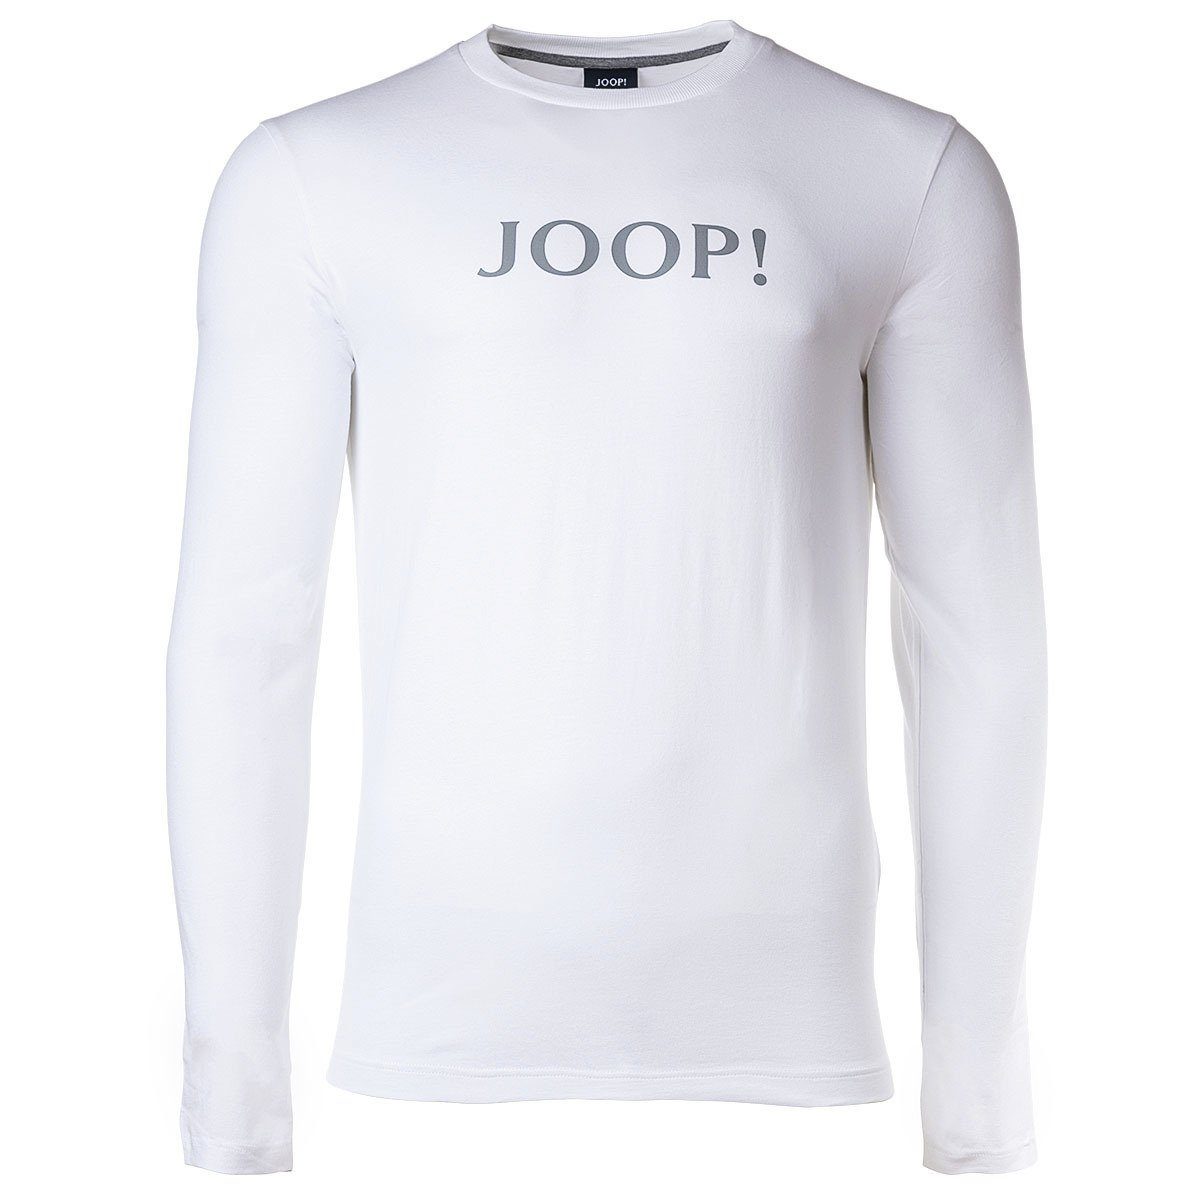 Langarm-Shirt T-Shirt Joop! - Rundhals Herren Weiß Loungewear,